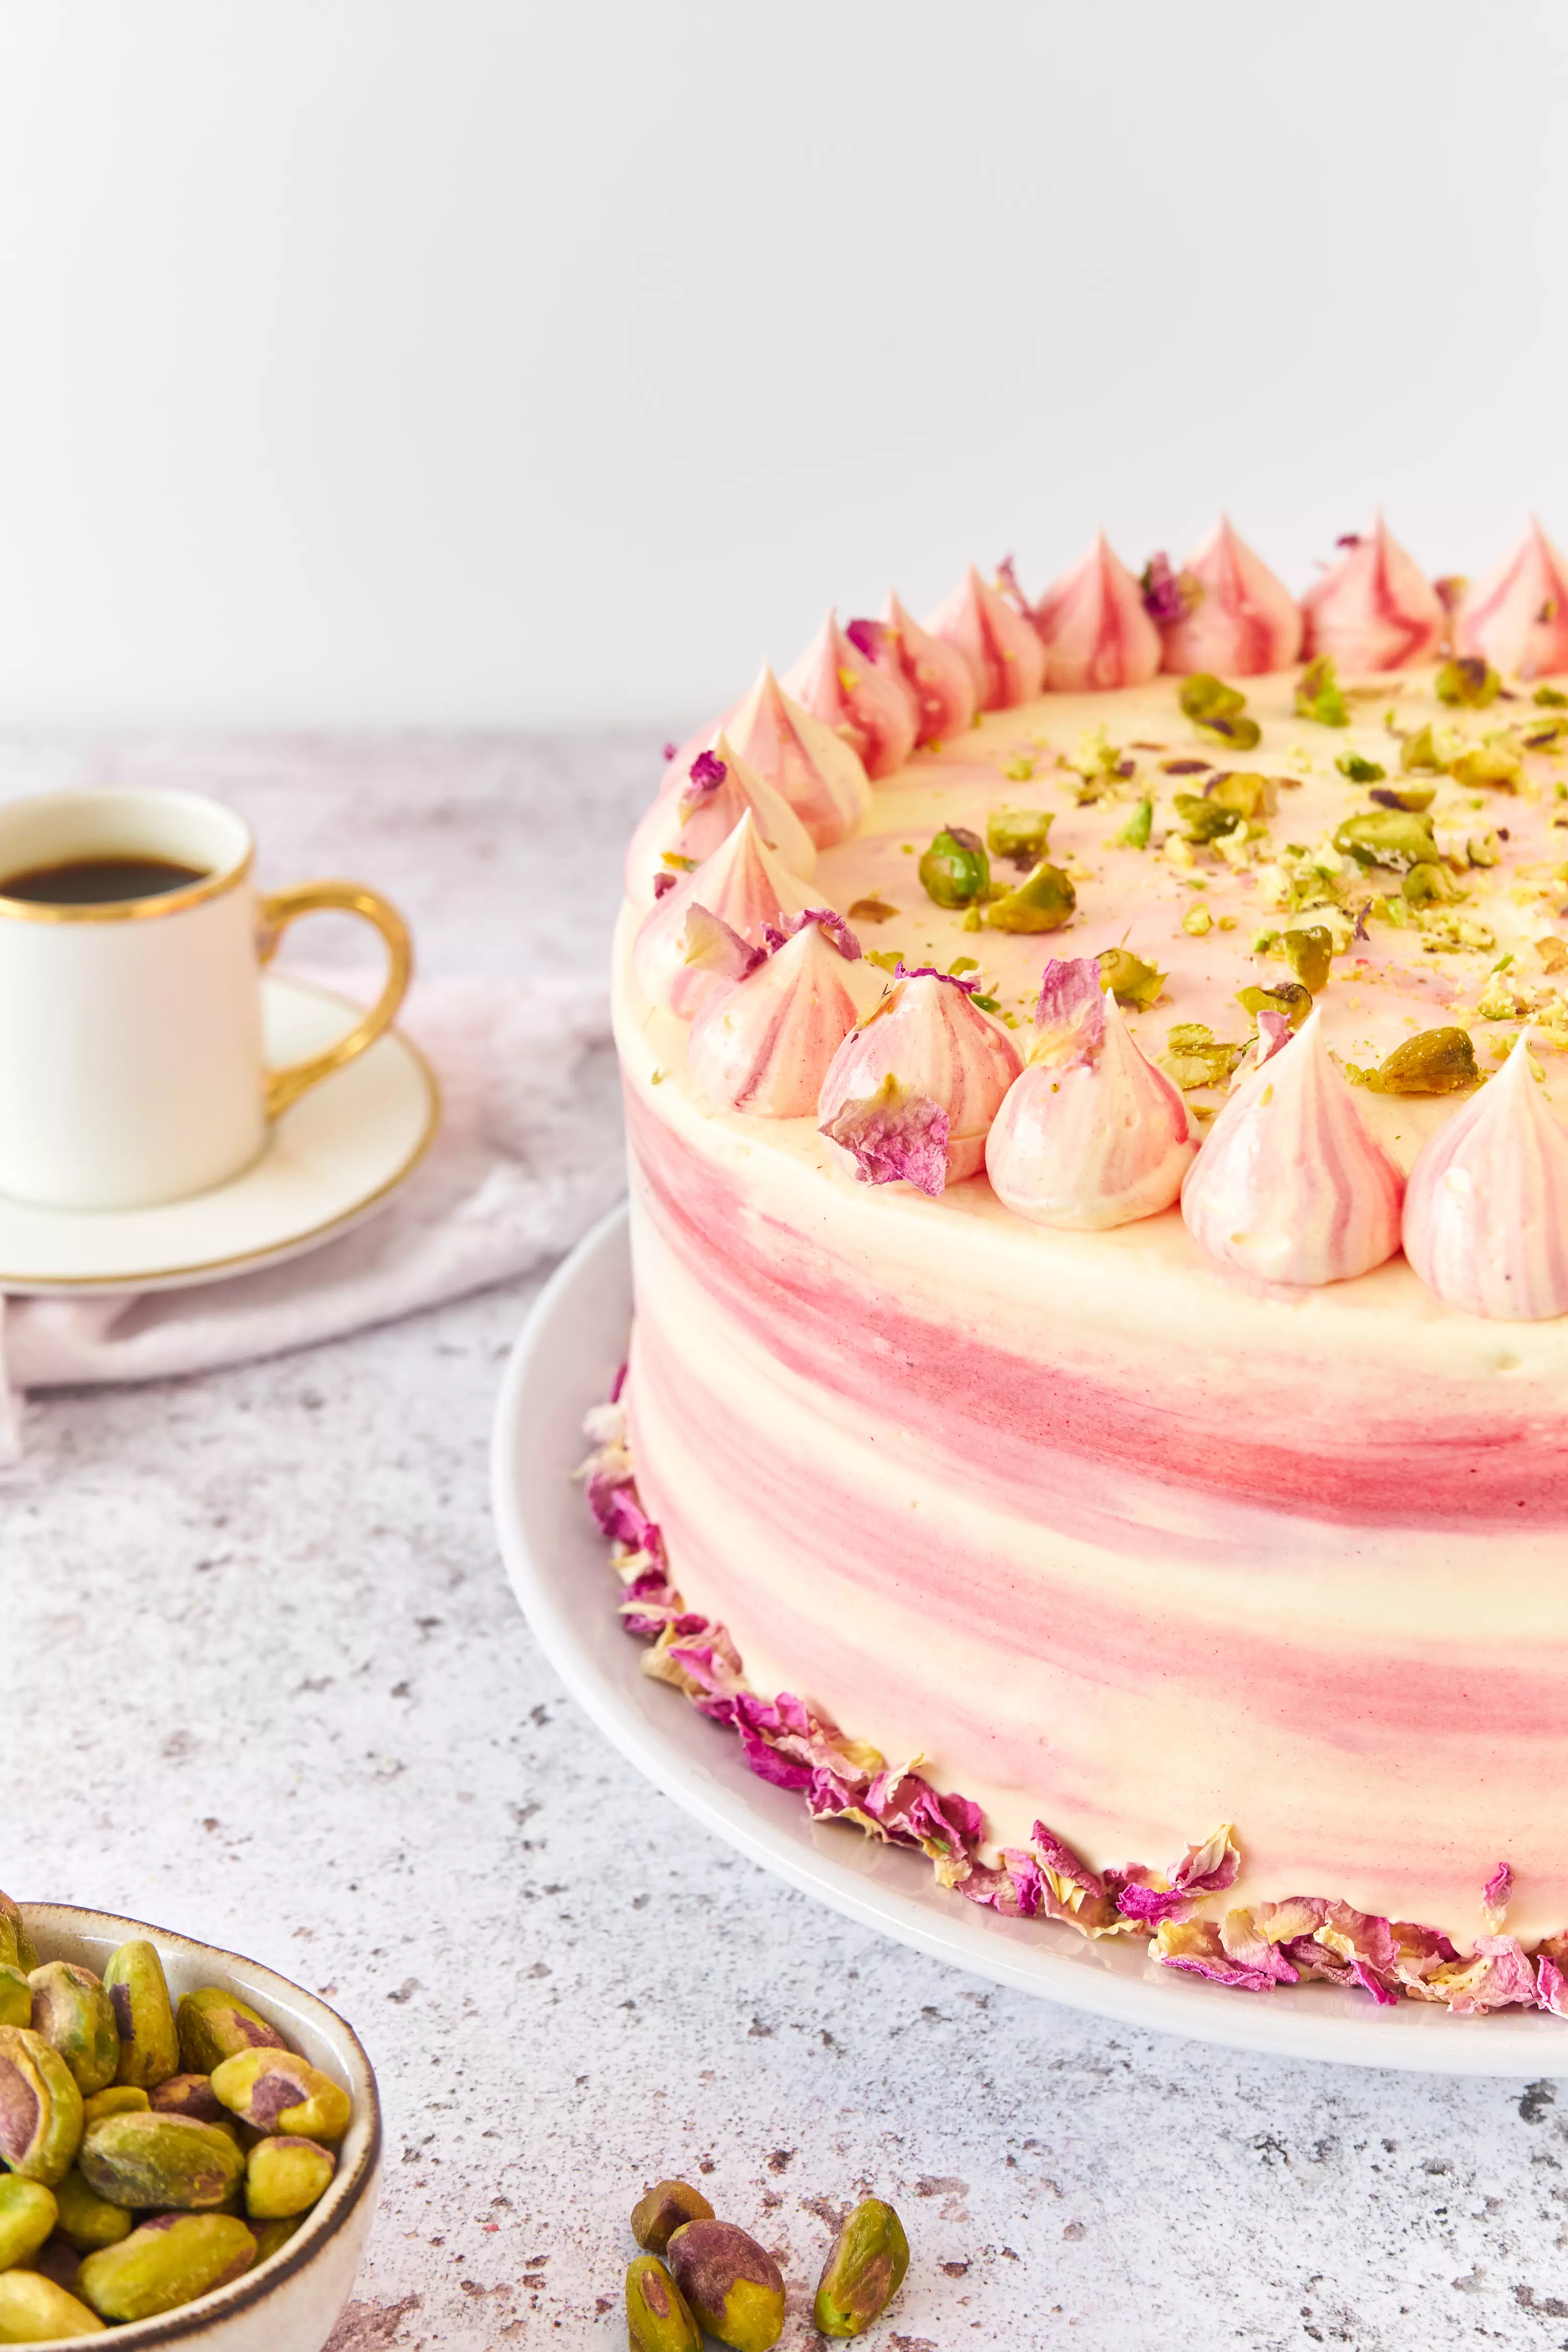 Dima's Pistachio Cake with Rosewater Cream – Dima Al Sharif